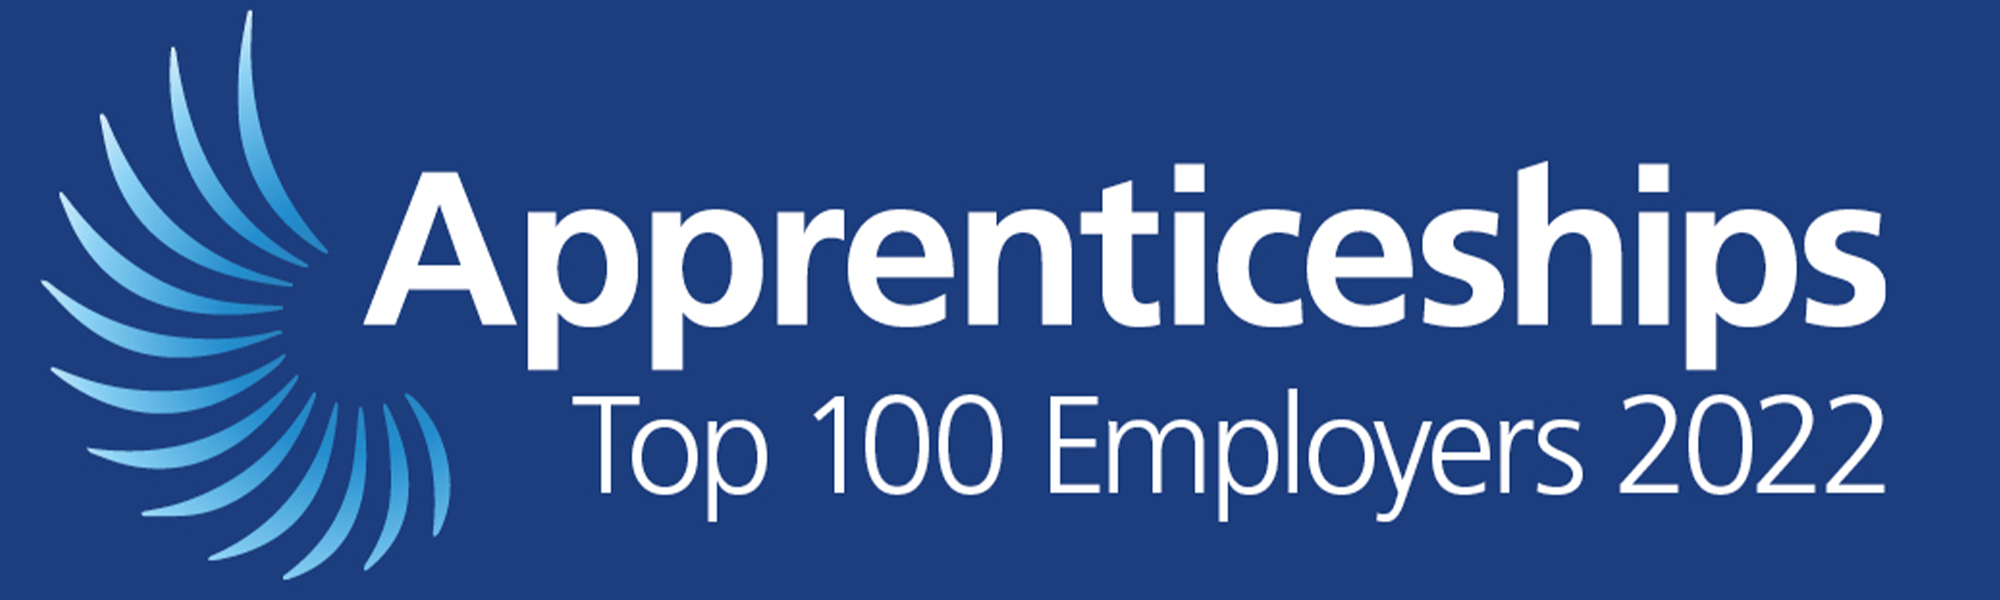 Top 100 Apprenticeship Banner